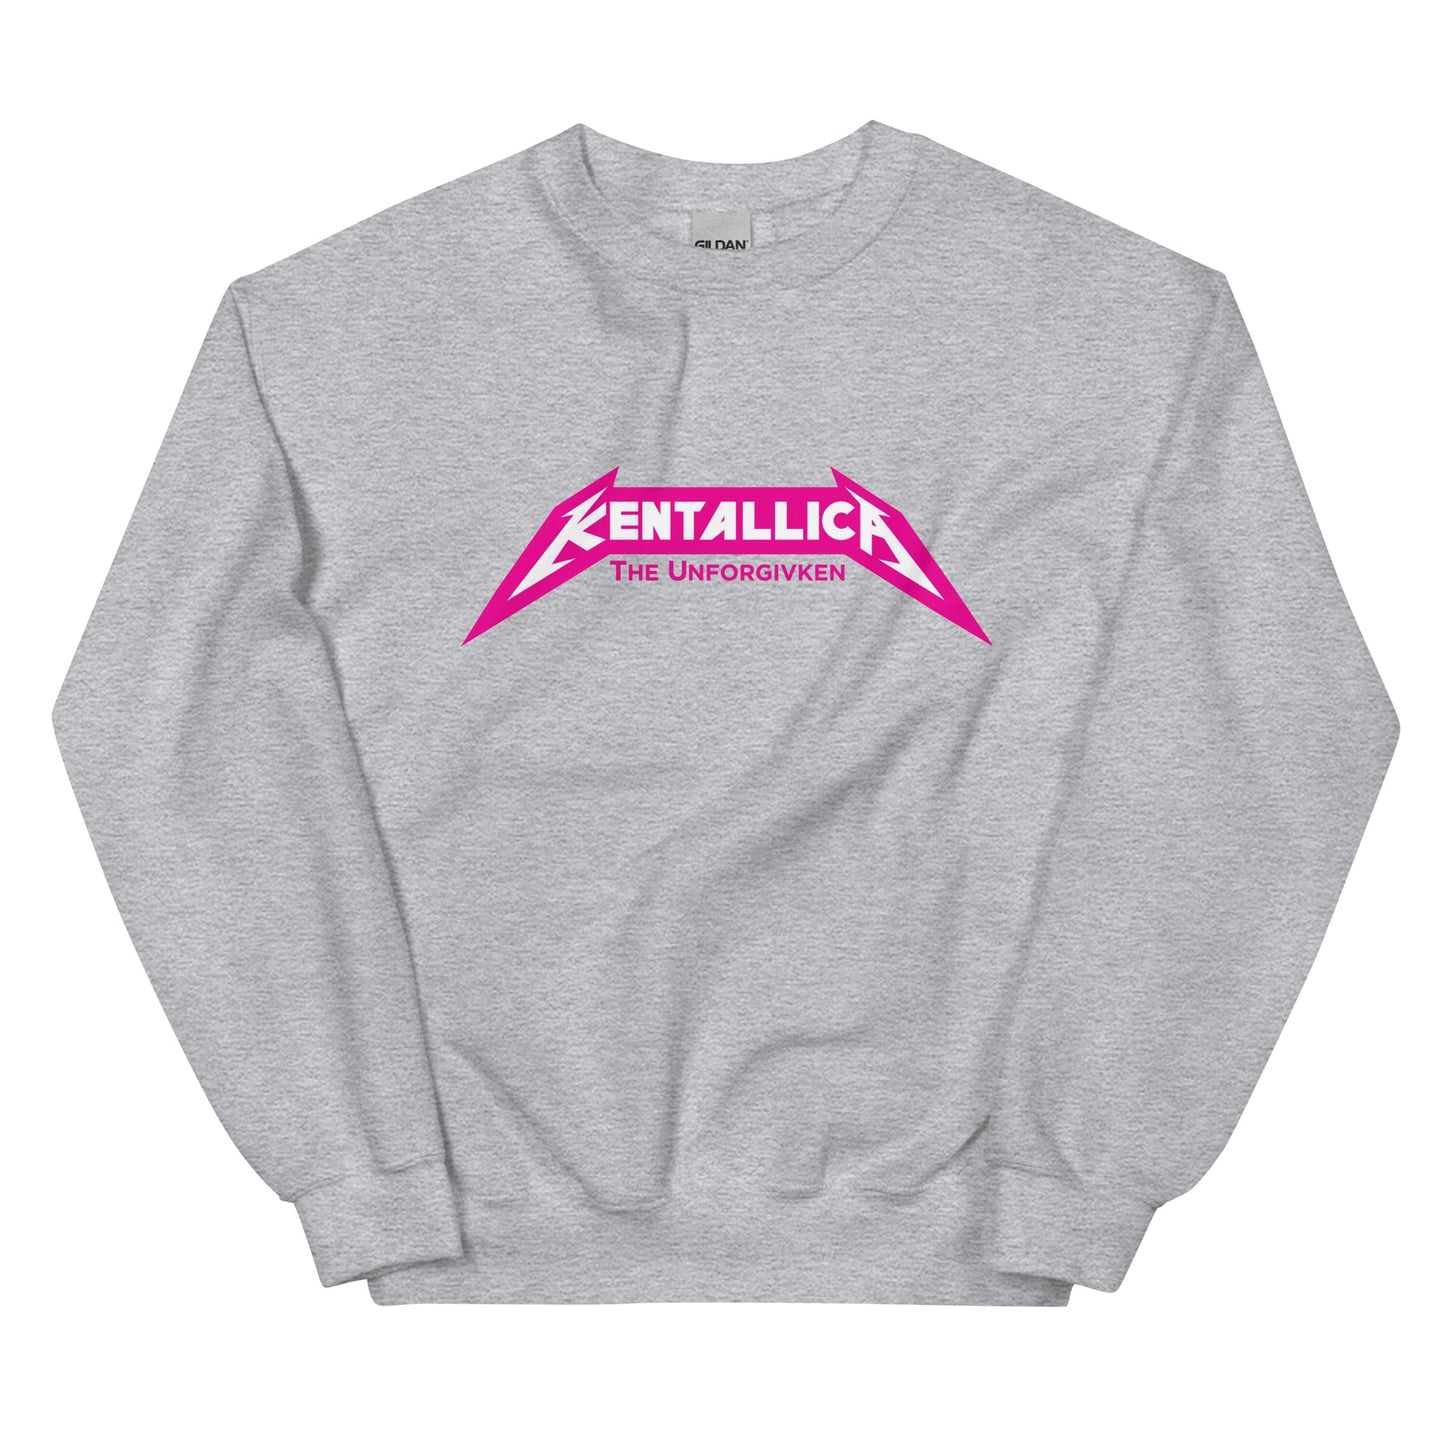 Kentallica (The Unforgivken) Unisex Sweatshirt